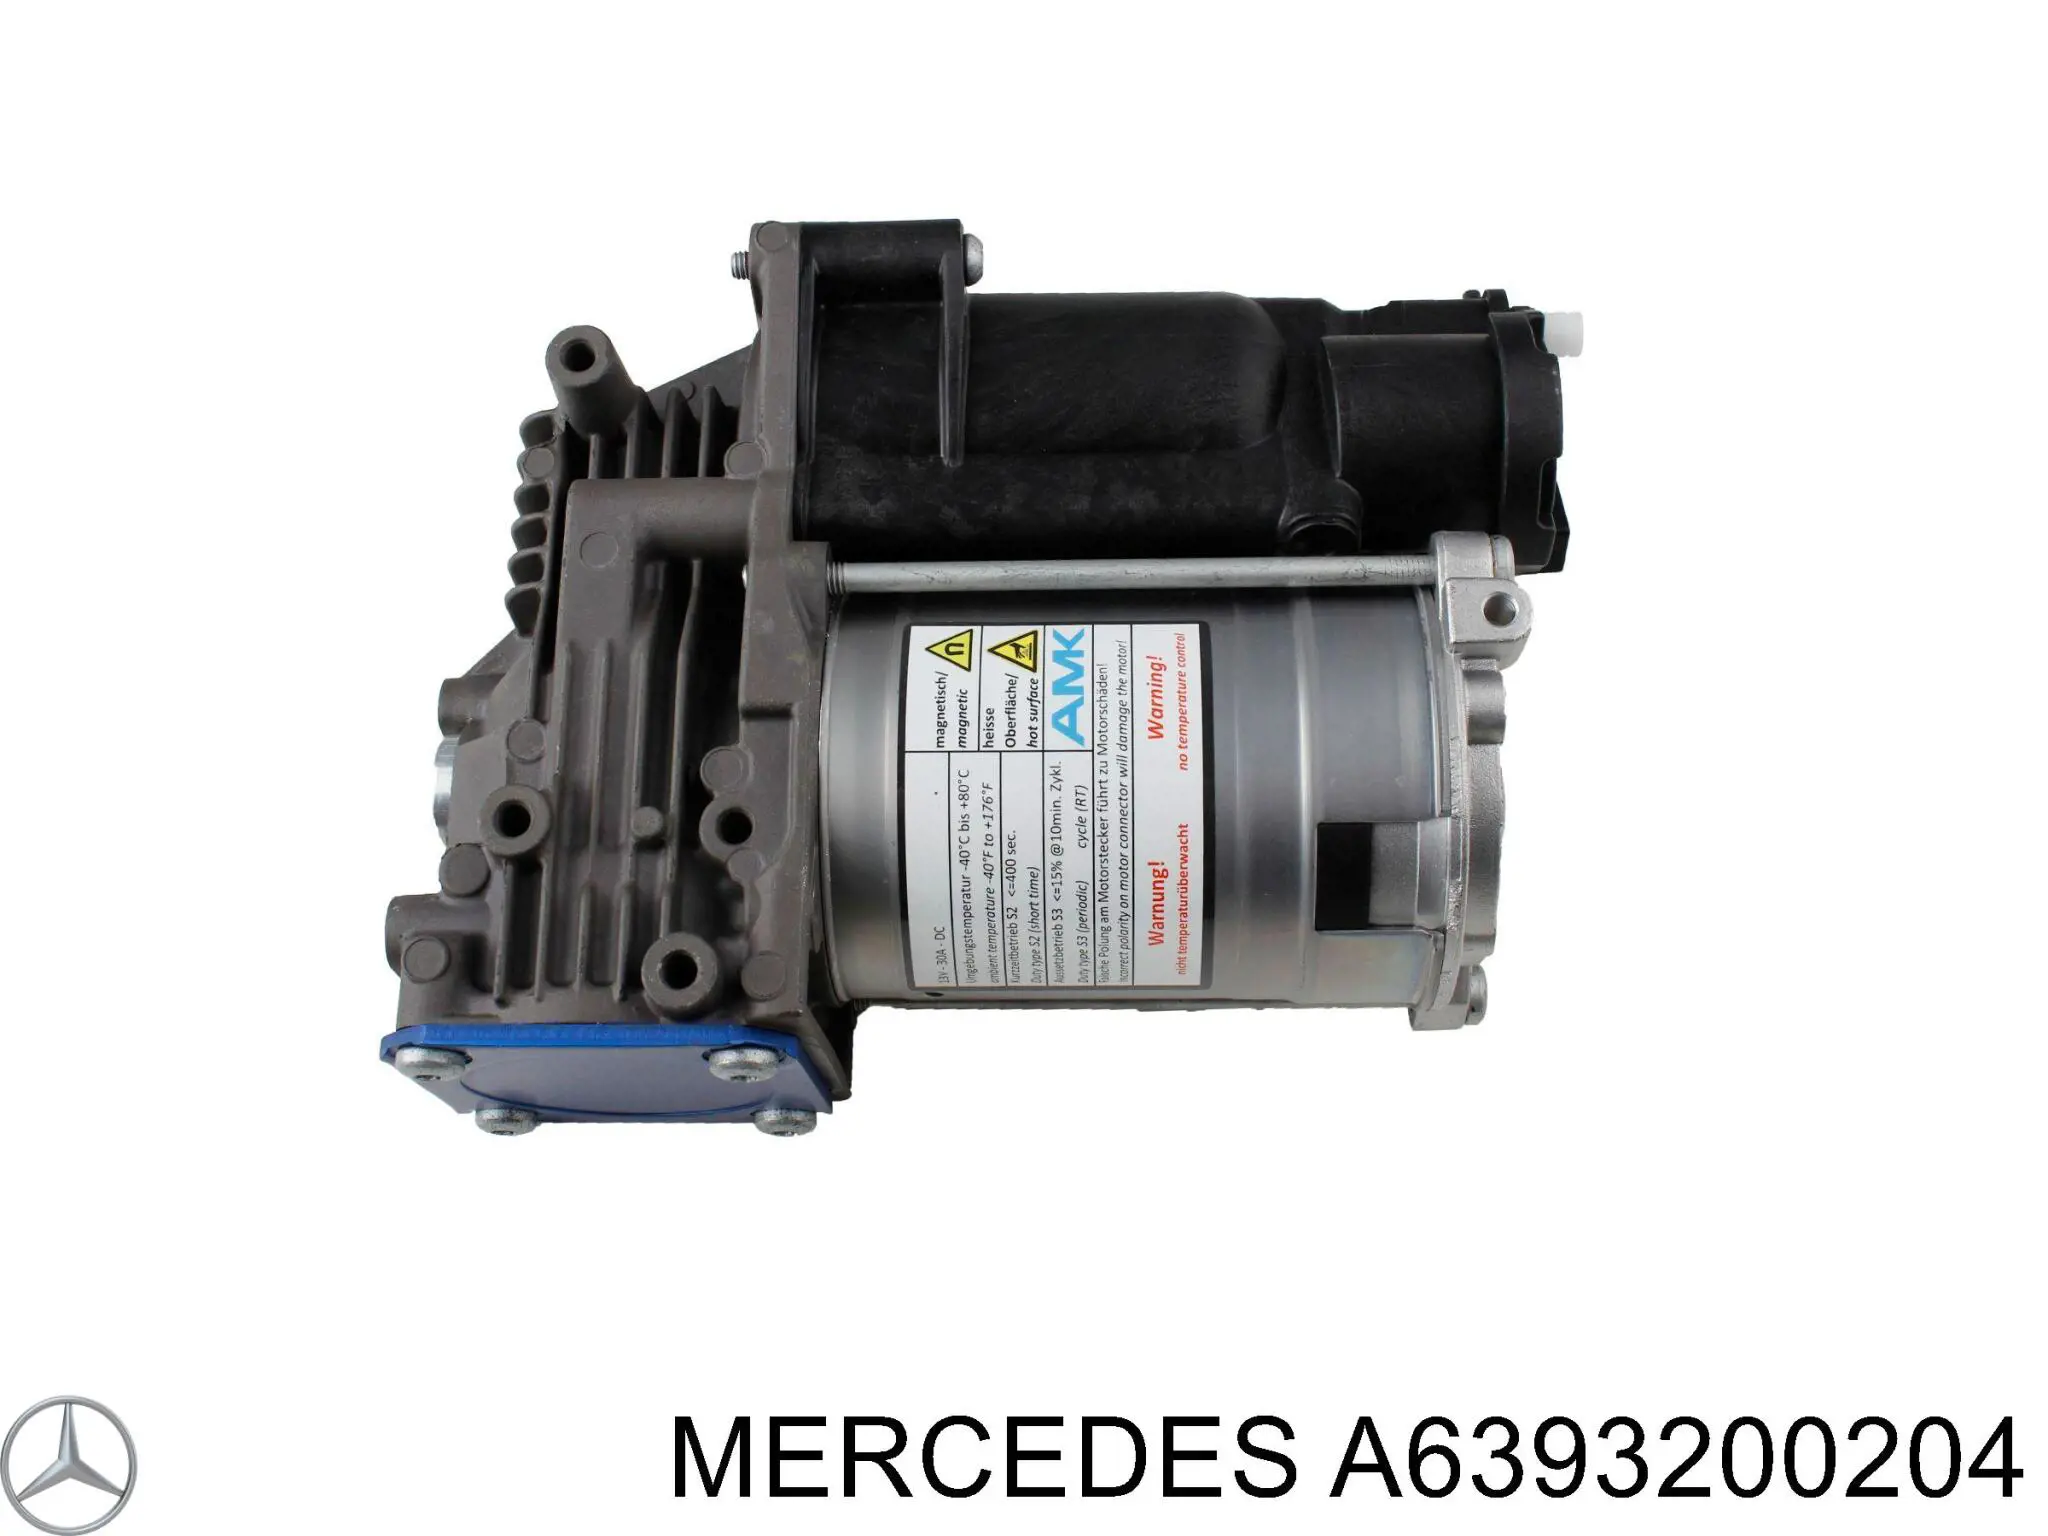 A6393200204 Mercedes компрессор пневмоподкачки (амортизаторов)